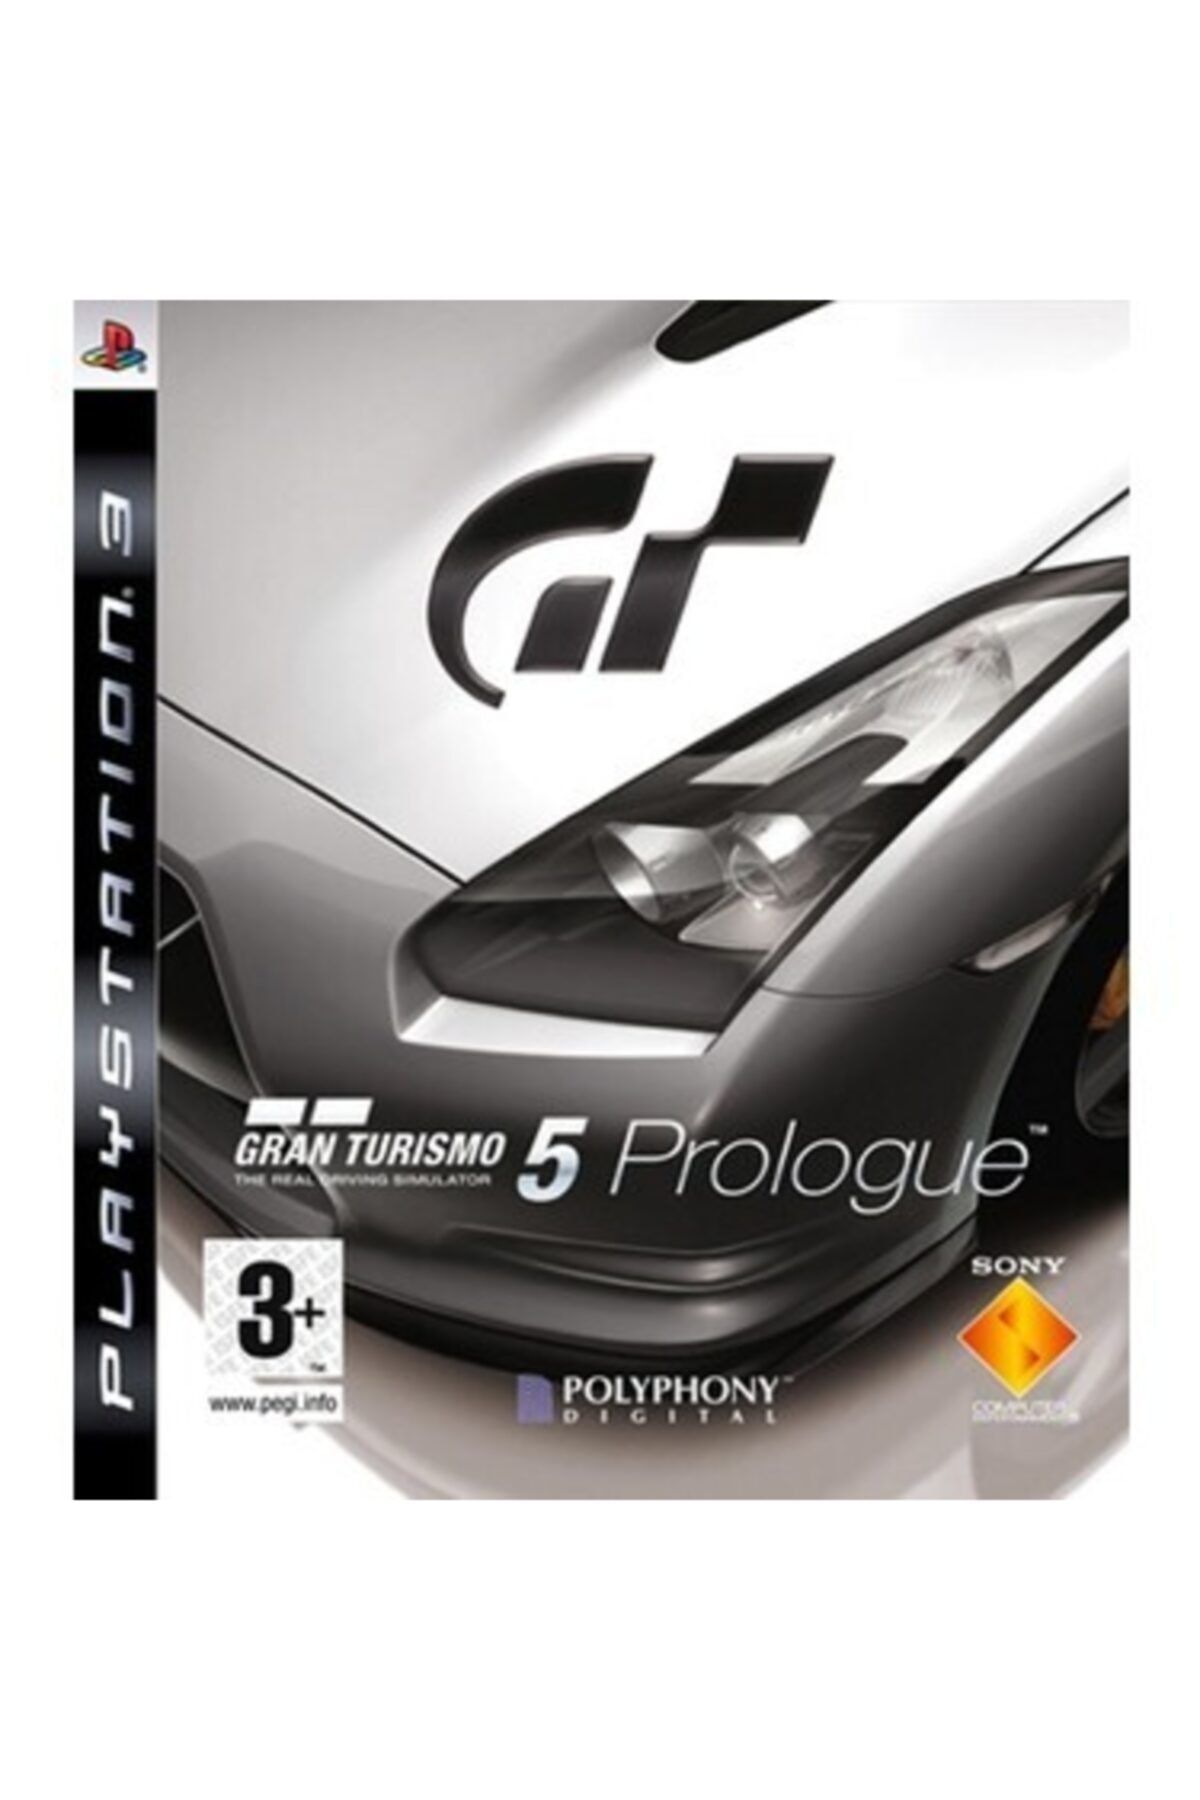 Sony Ps3 Gran Turismo 5 Prologue